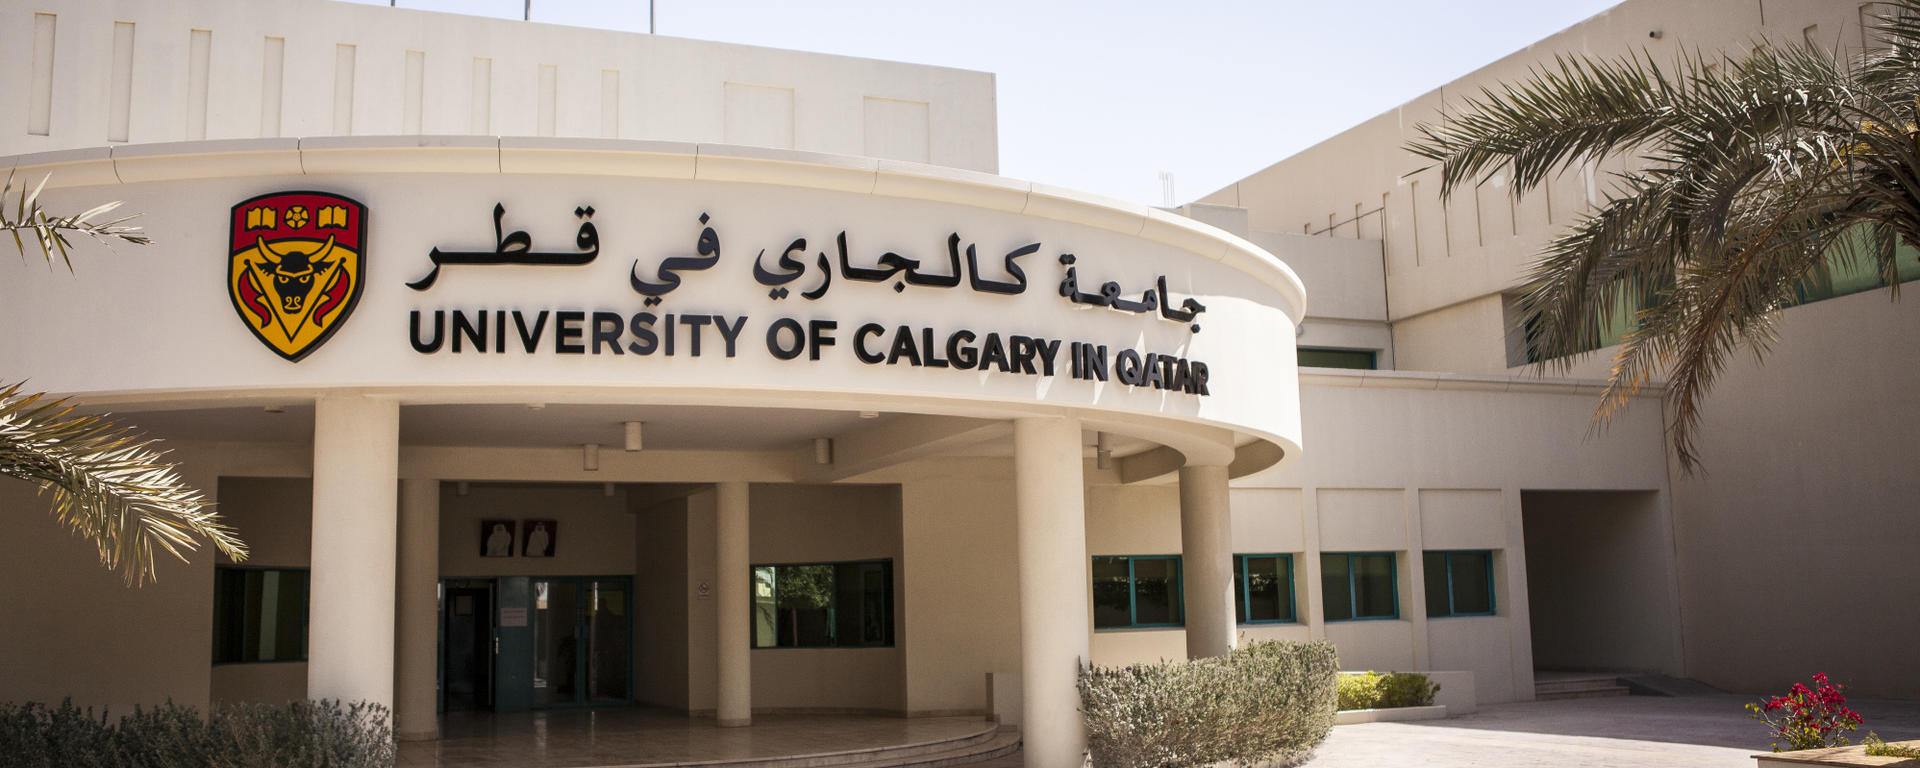 University of Calgary in Qatar exterior